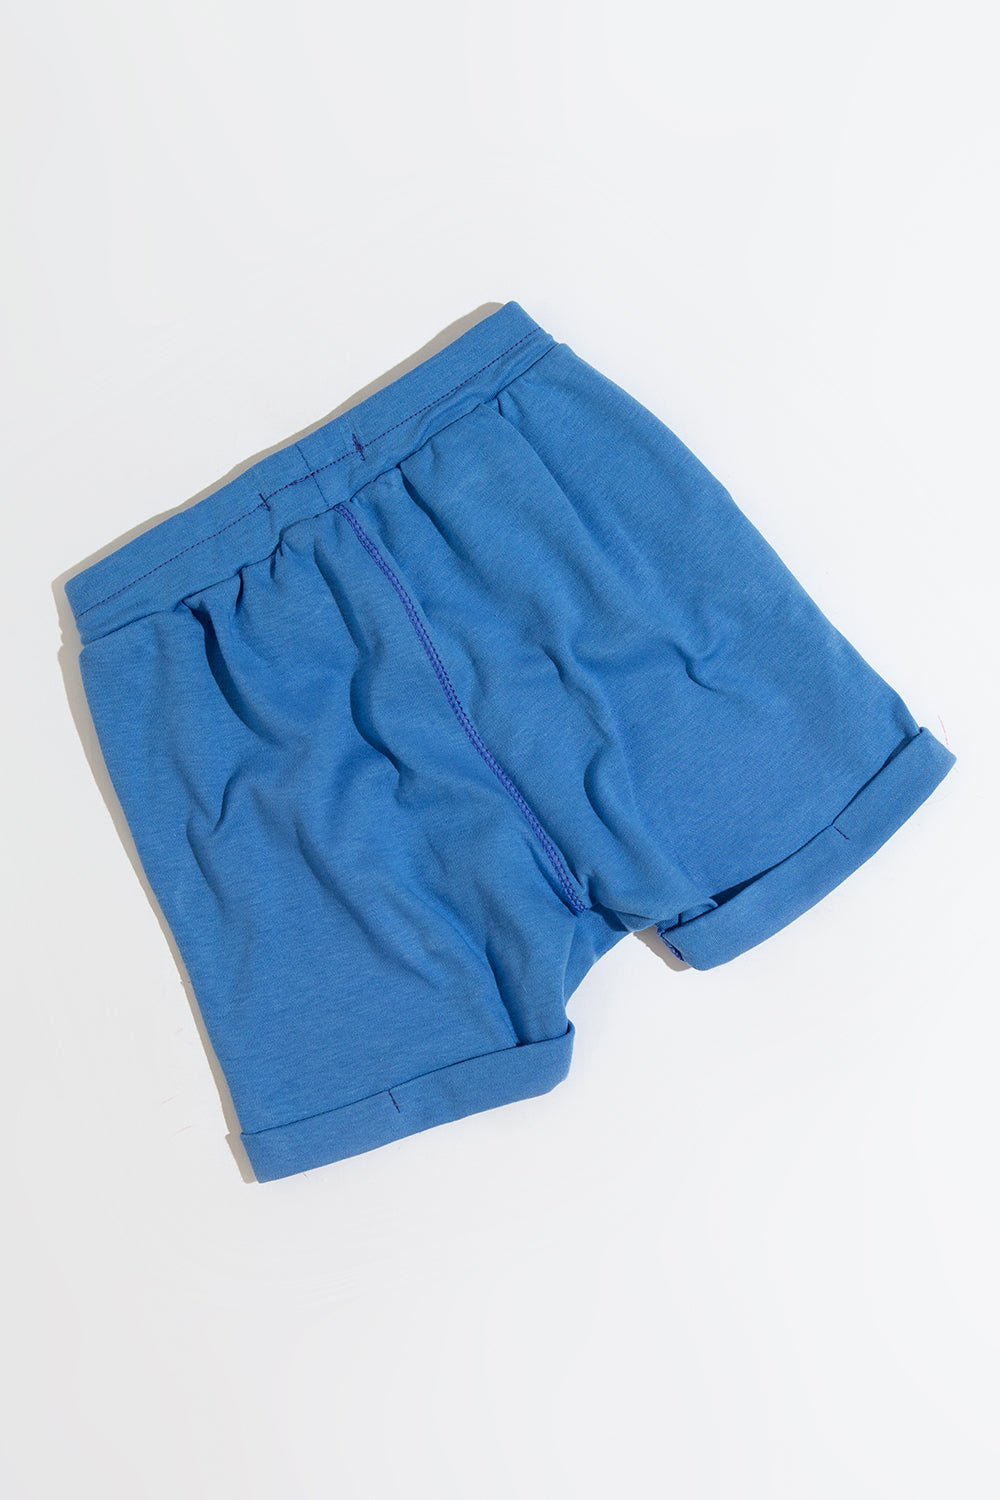 Shorts Saruel Azul